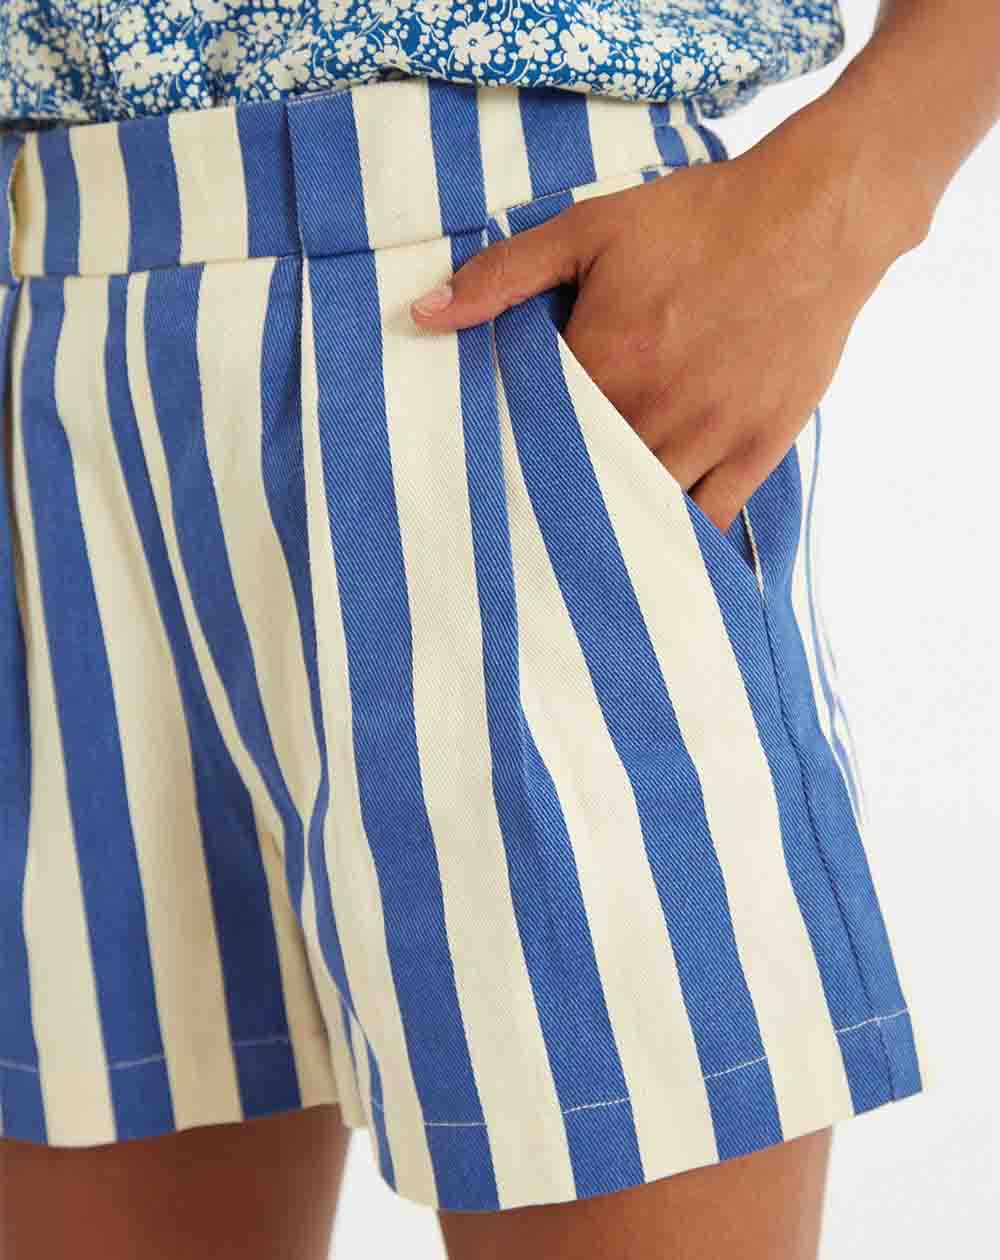 Louche Hilton Shorts in Deck Stripe Blue